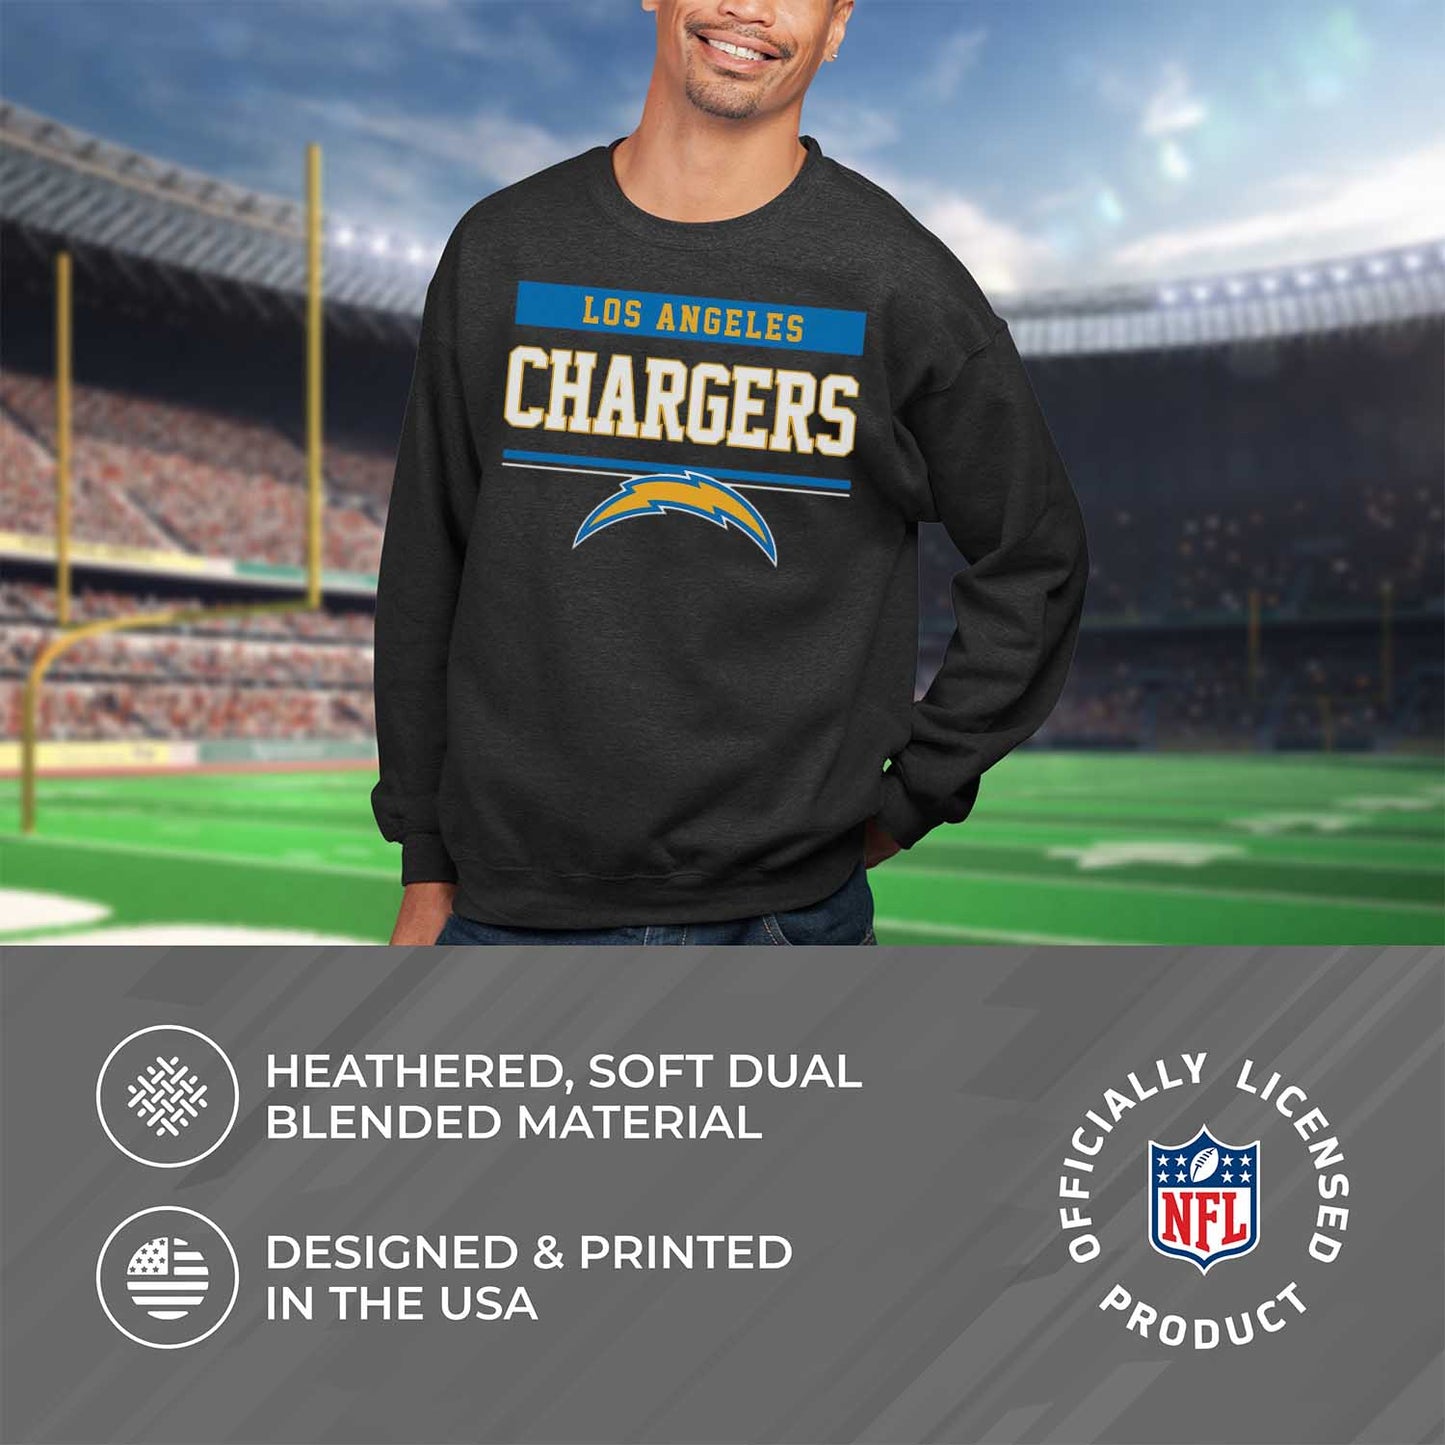 Los Angeles Chargers NFL Adult Long Sleeve Team Block Charcoal Crewneck Sweatshirt - Charcoal